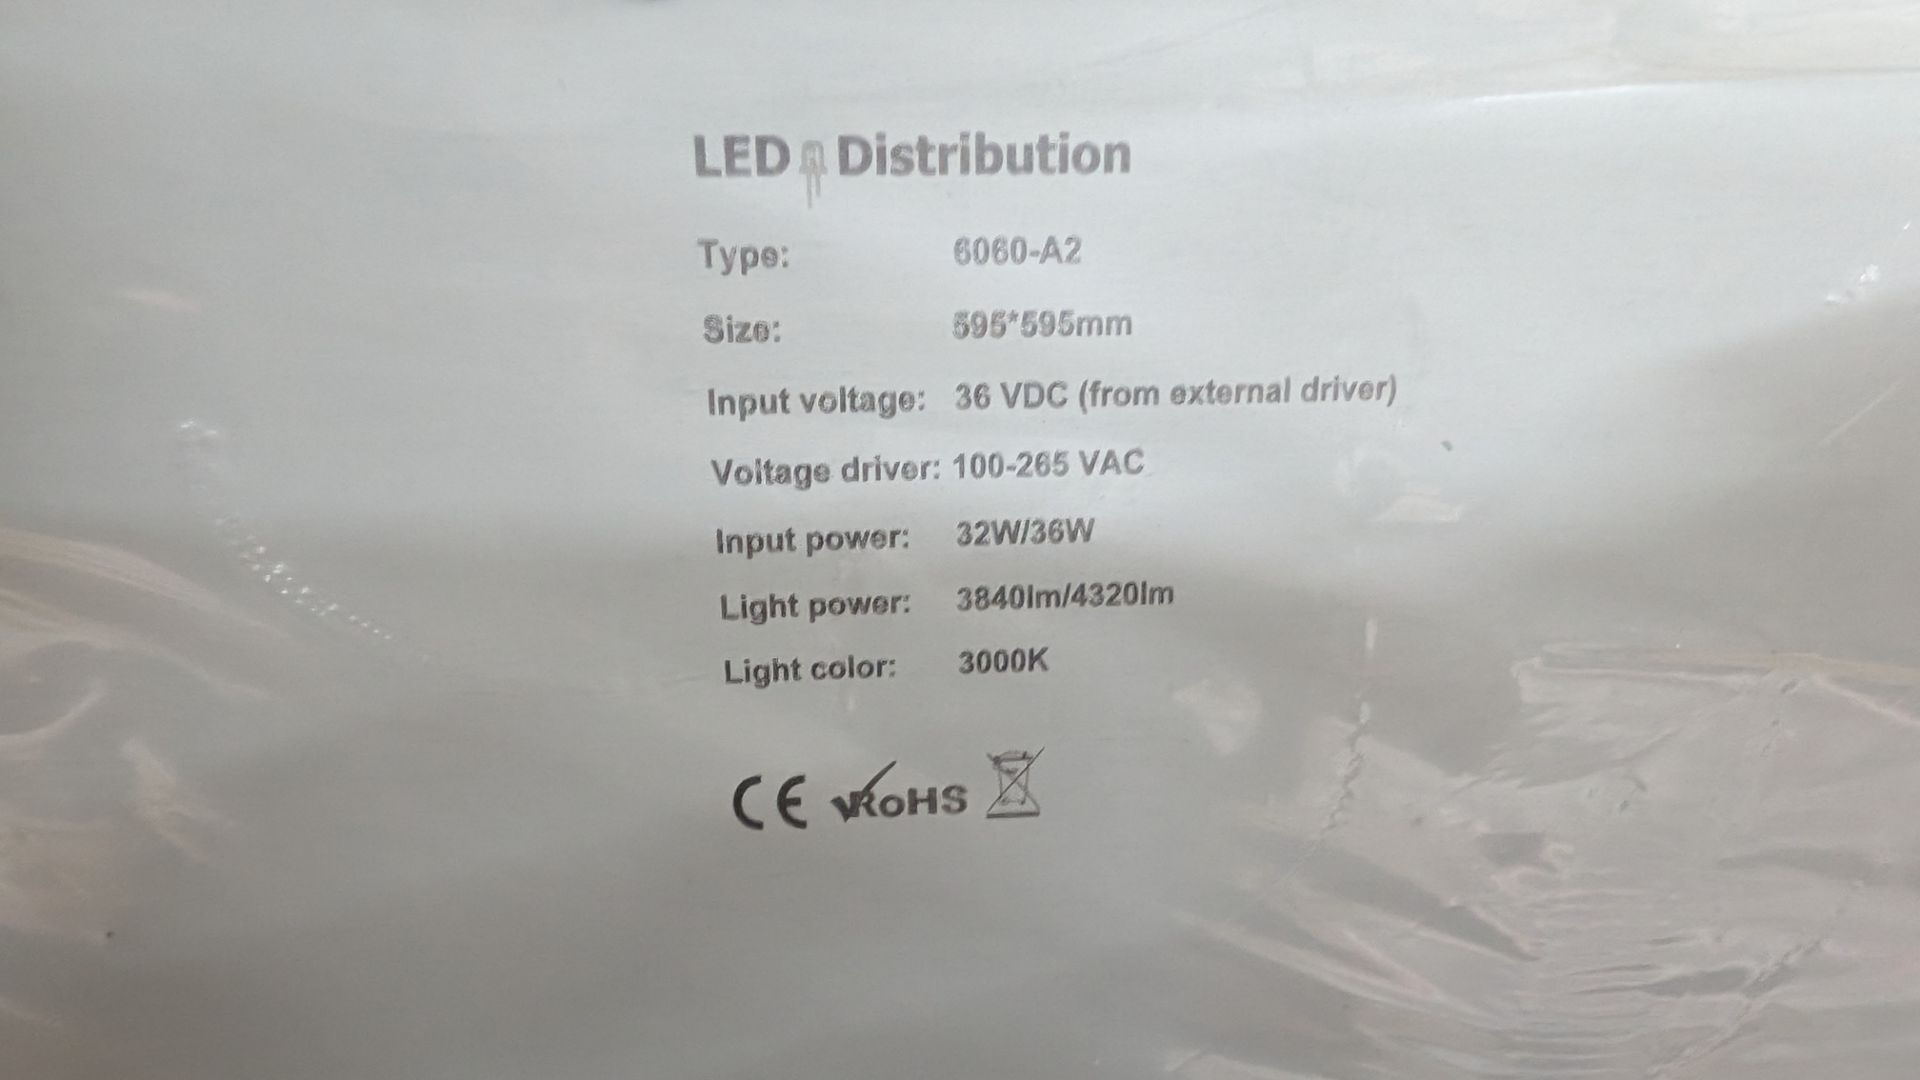 20 off Elegance Premium Eco 595mm x 595mm LED lighting panels. 3000k. 32/36w input power. 36w dri - Image 9 of 14